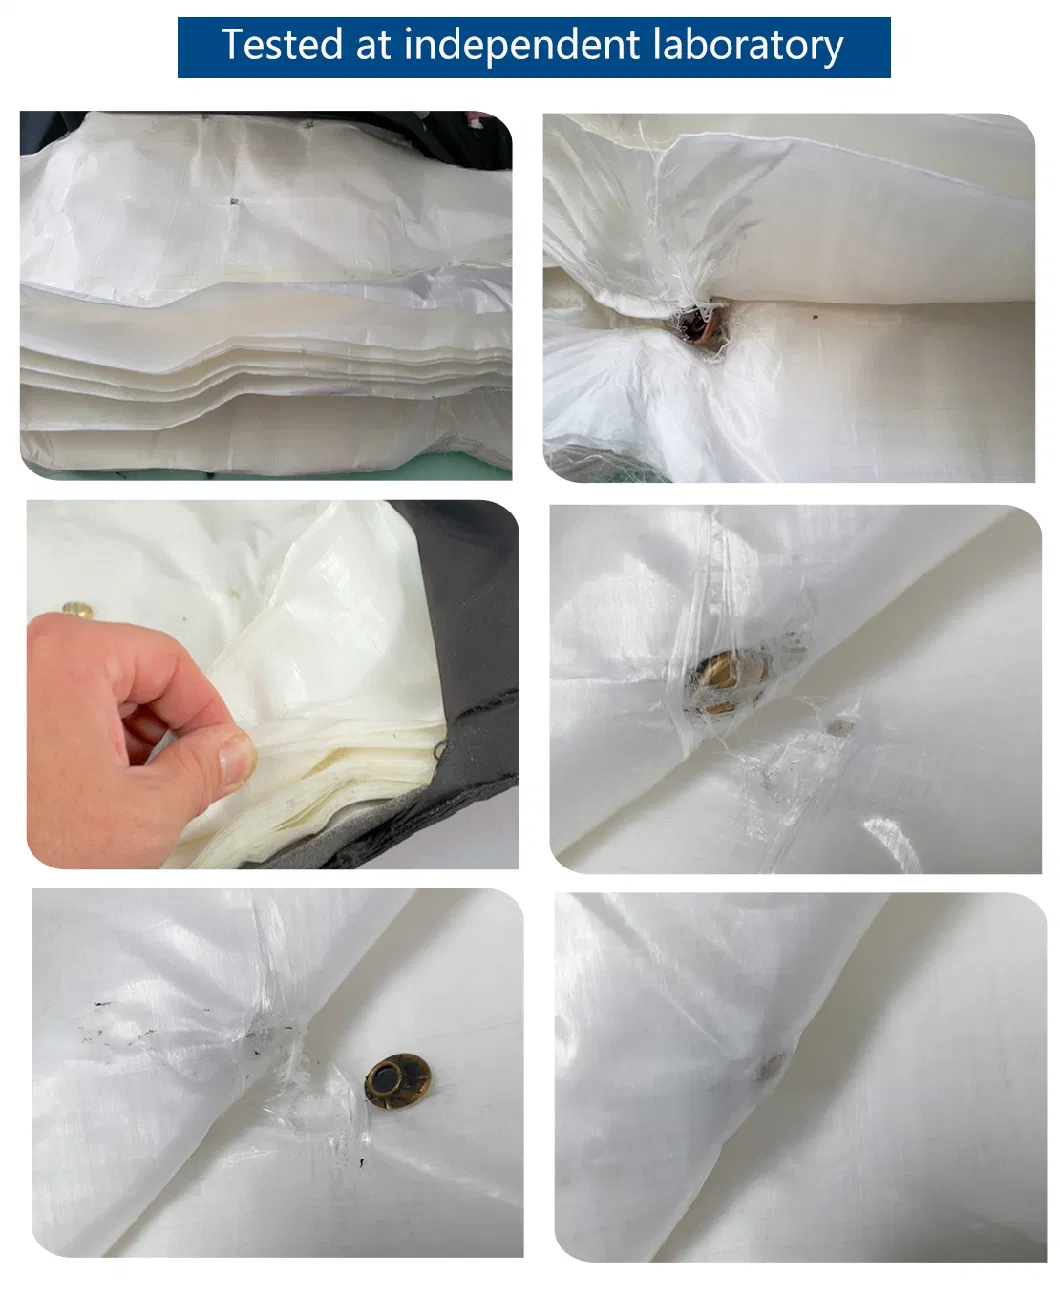 Modular Full Body Protective Bulletproof Clothing for Military and Police Operations Nij Iiia Bulletproof Vest